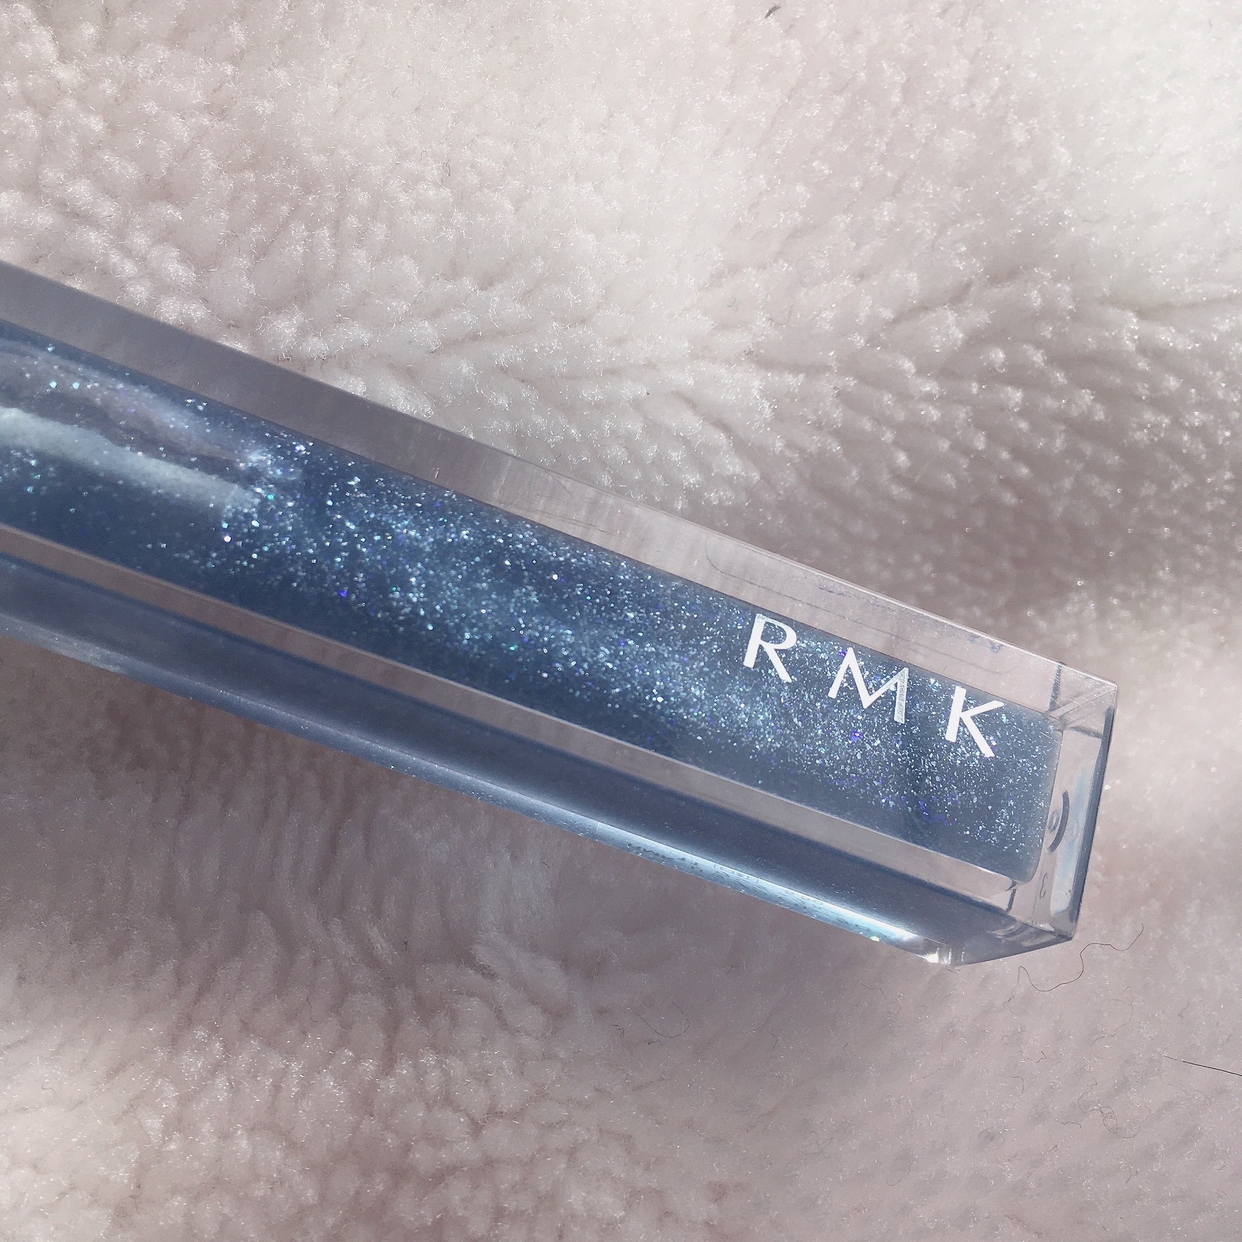 RMK(アールエムケー) リップジェリーグロスを使ったあいうえさんのクチコミ画像2